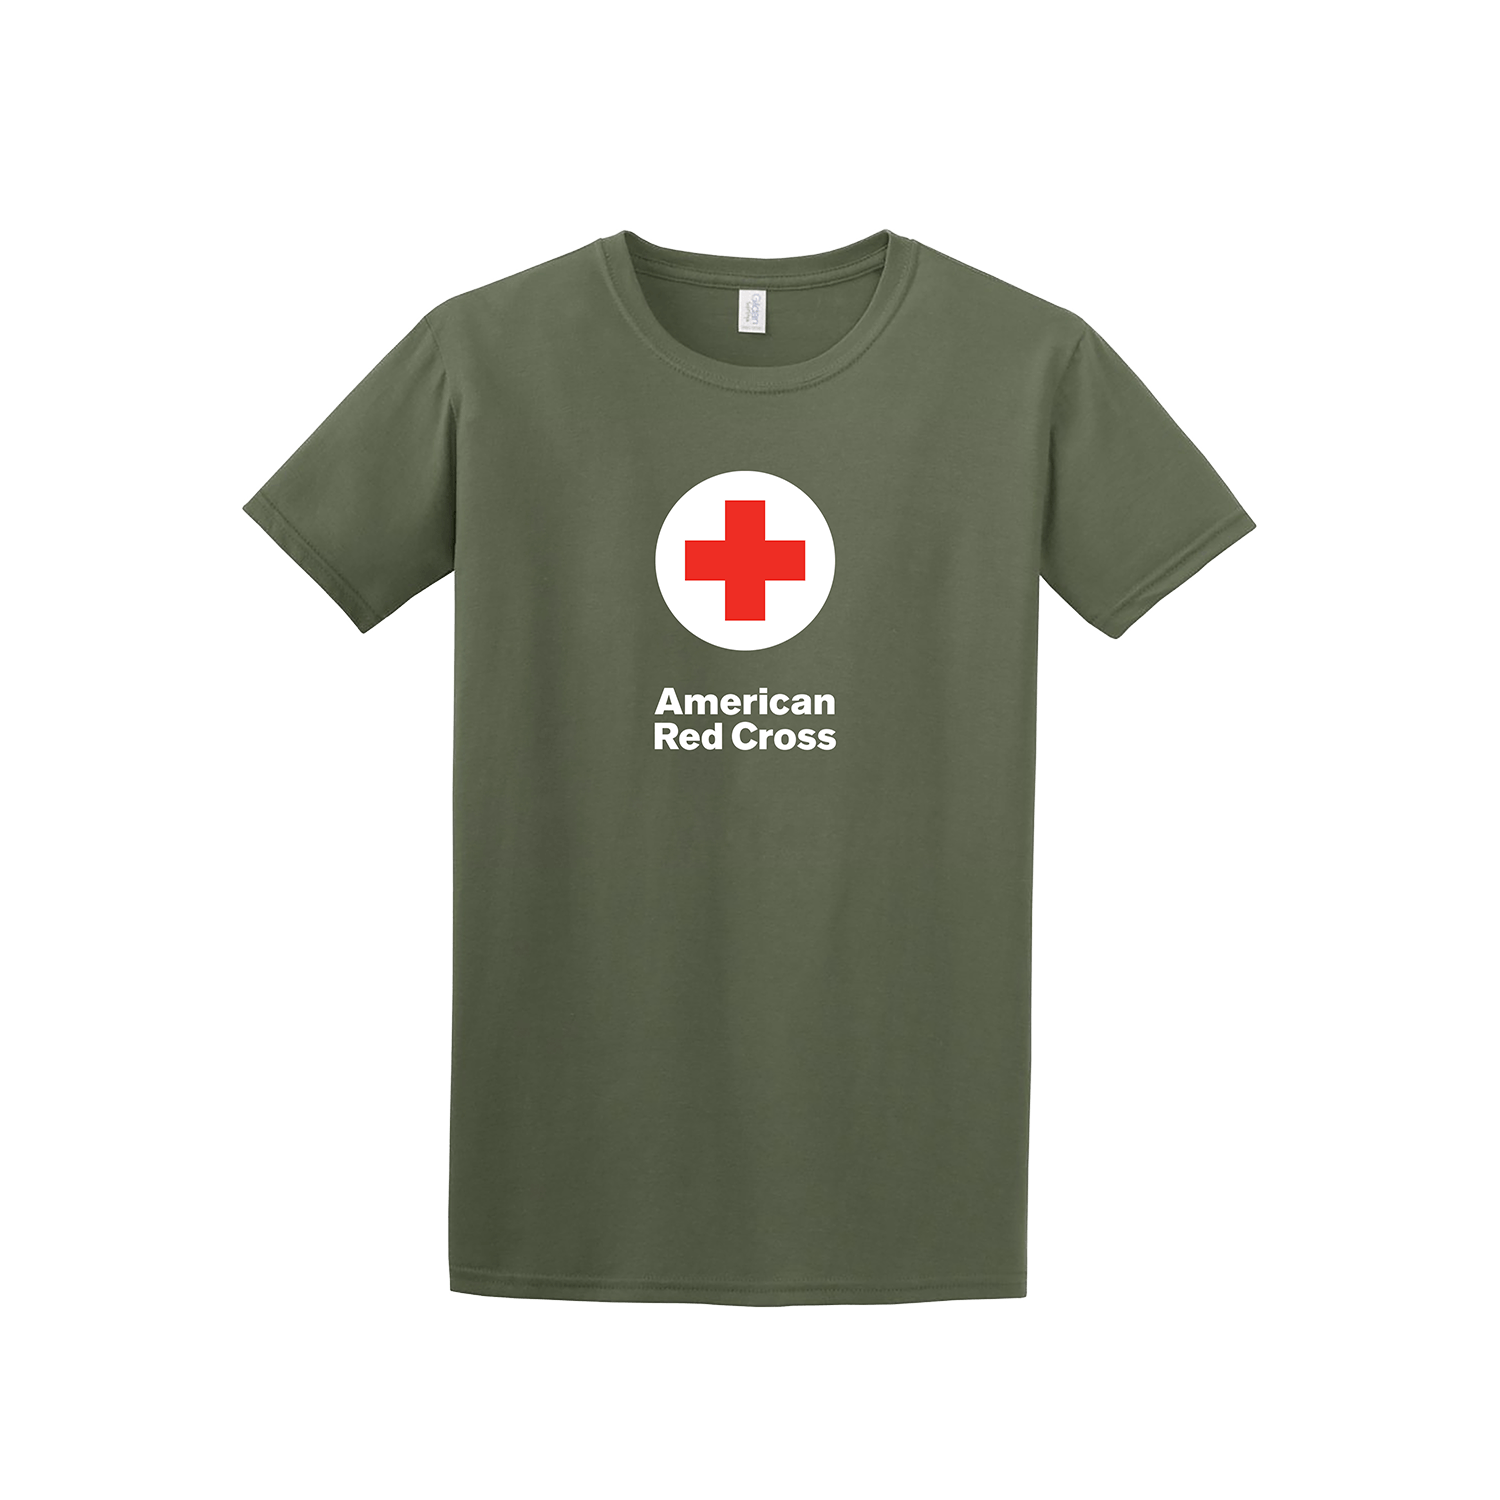 T Cross Logo - Unisex 100% Cotton T Shirt With ARC Logo. Red Cross Store